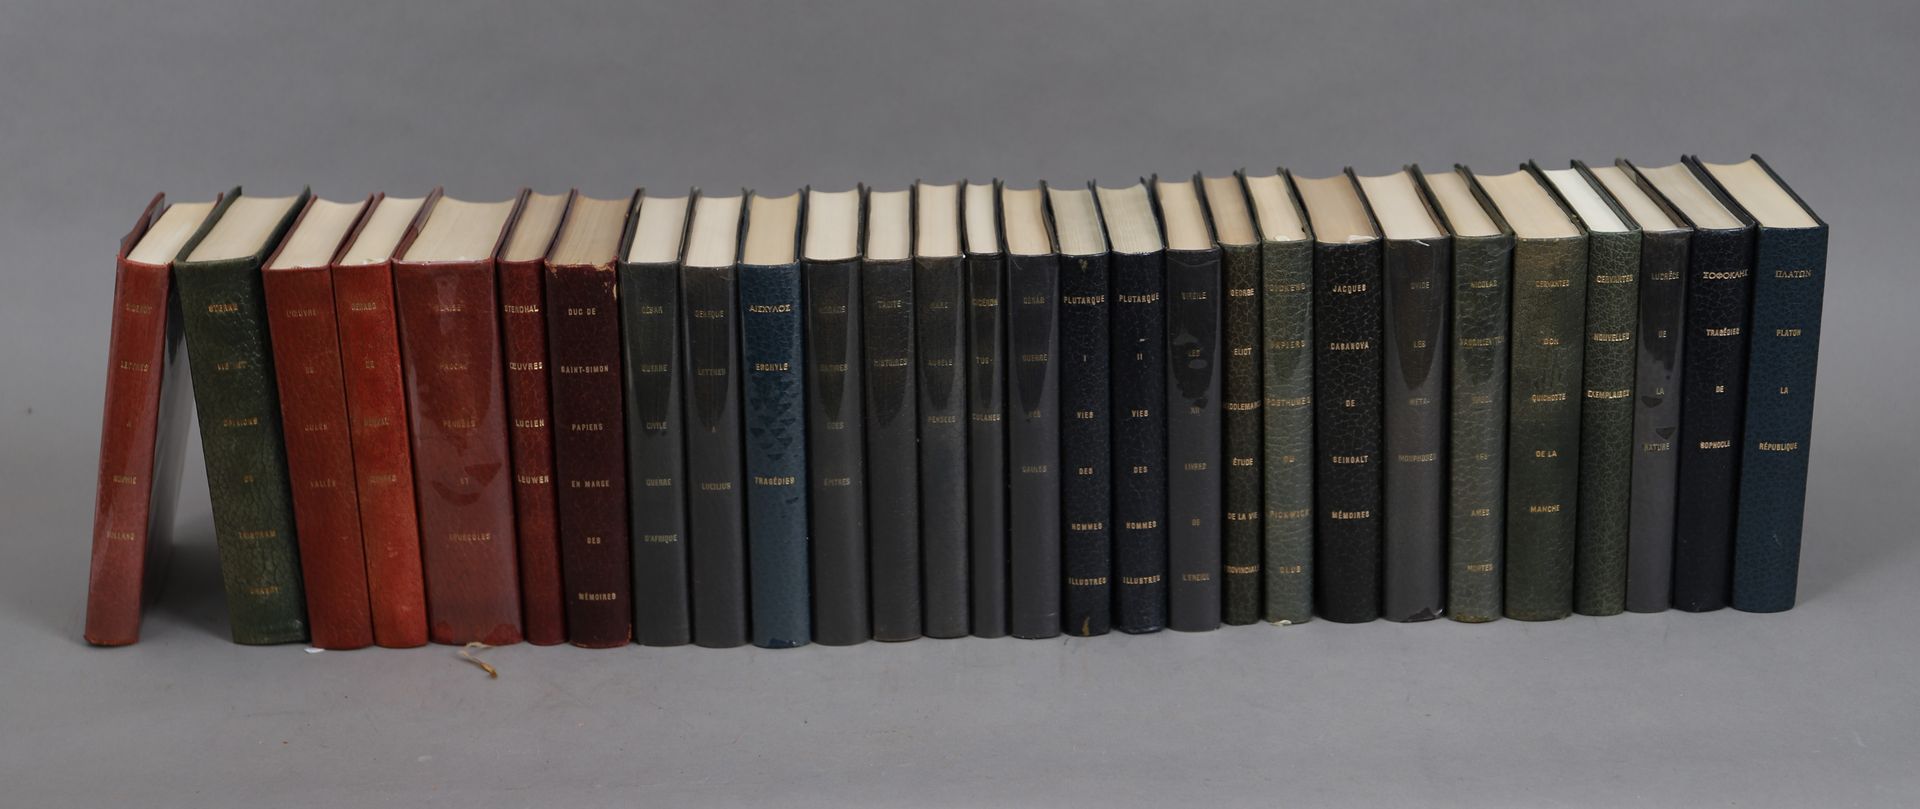 Null 文学经典

一共有28卷装订成册。

1965.